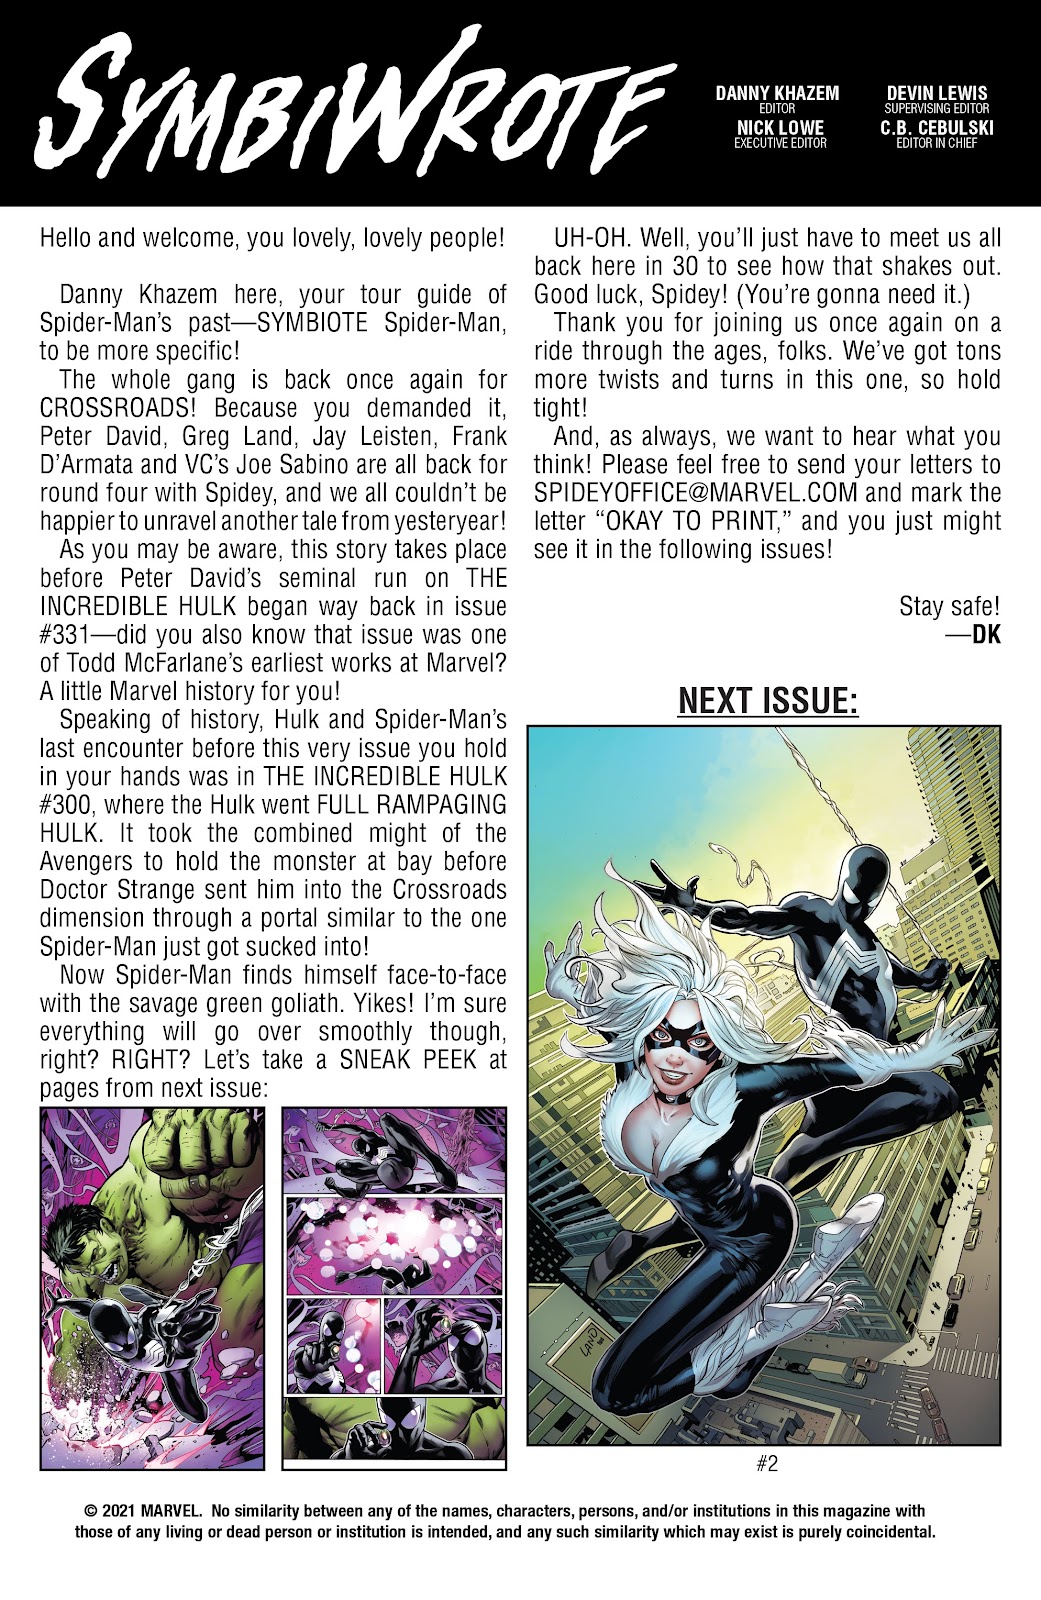 Symbiote Spider-Man: Crossroads issue 1 - Page 33